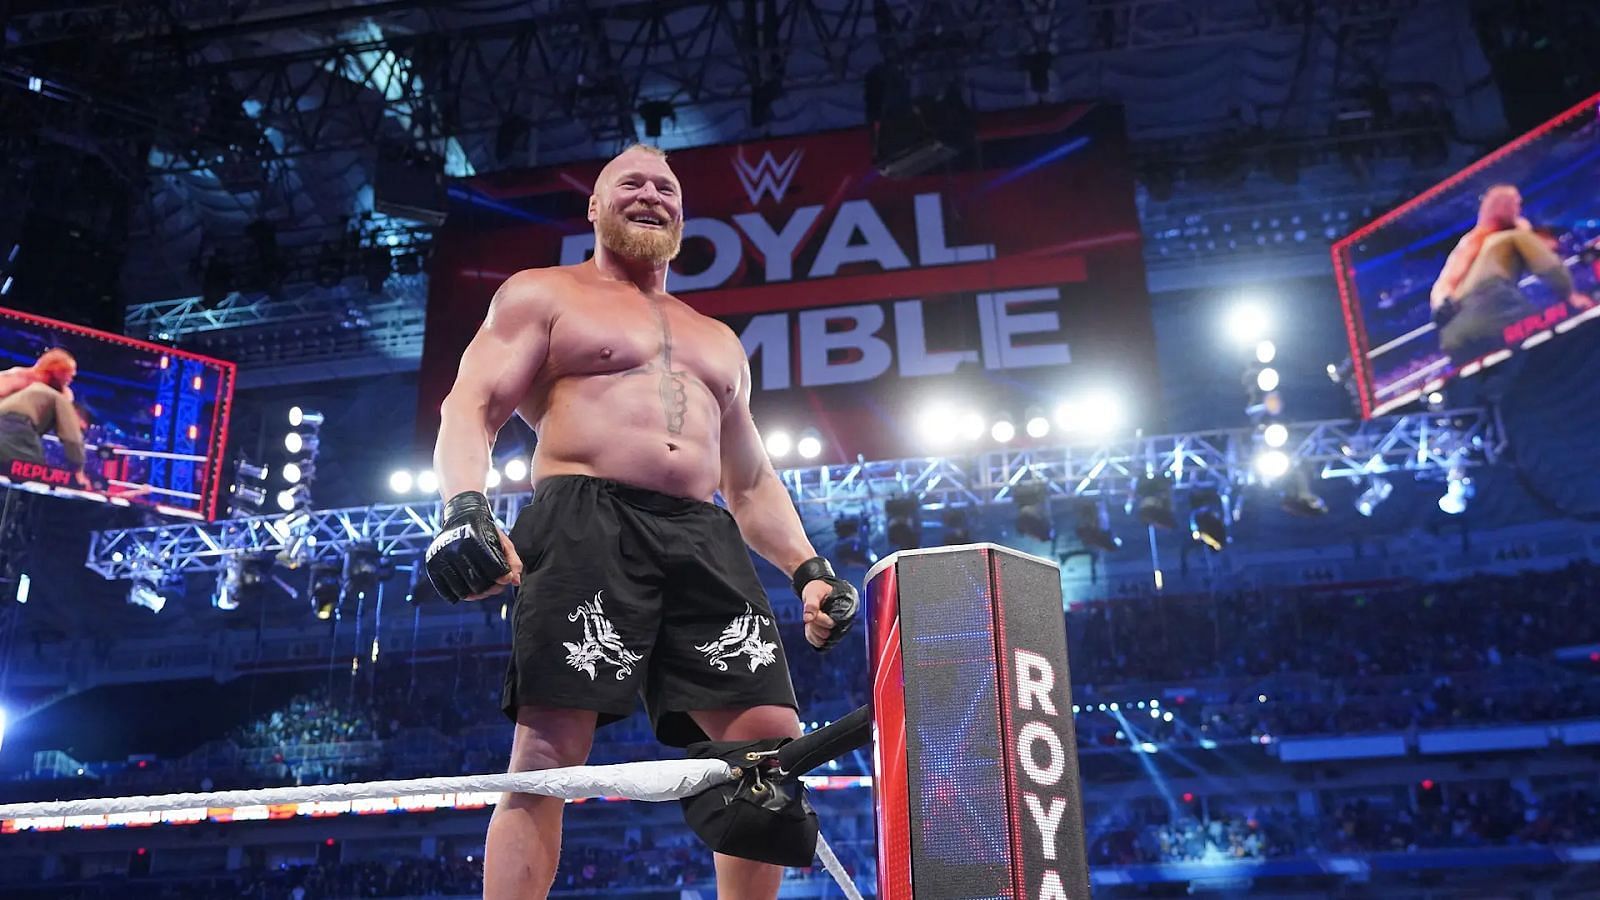 How many times has Brock Lesnar won the Royal Rumble?